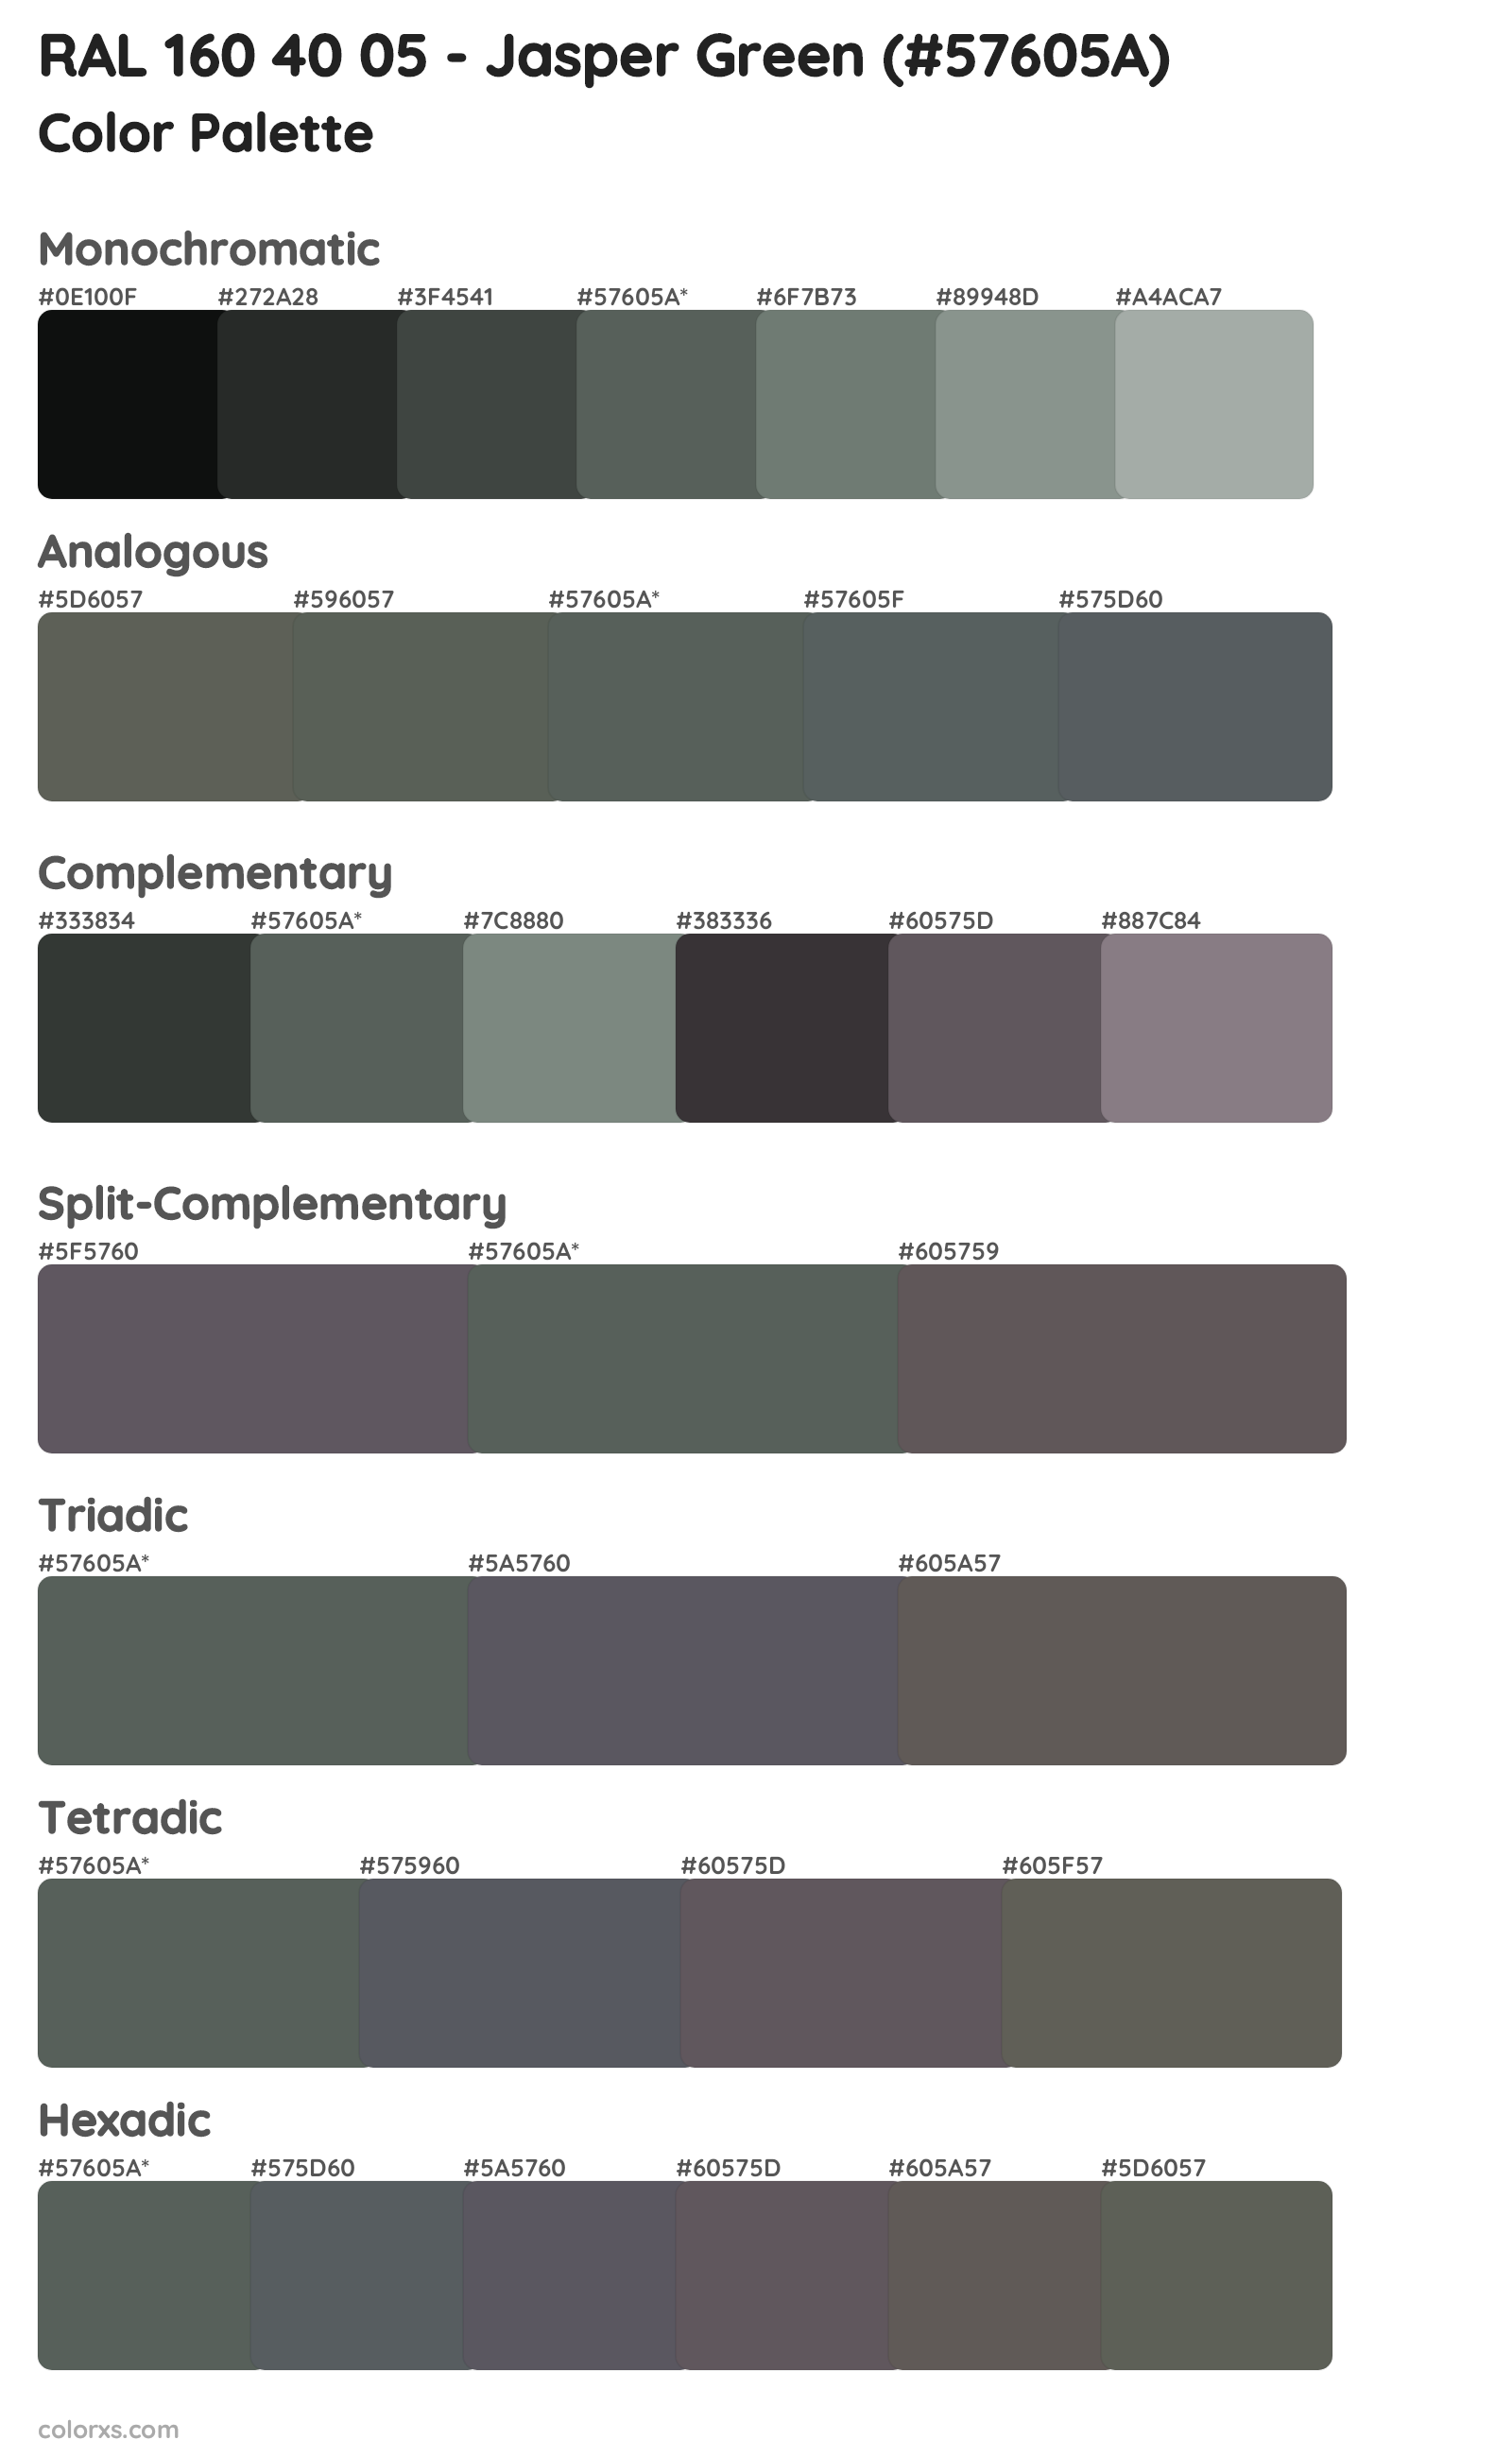 RAL 160 40 05 - Jasper Green Color Scheme Palettes